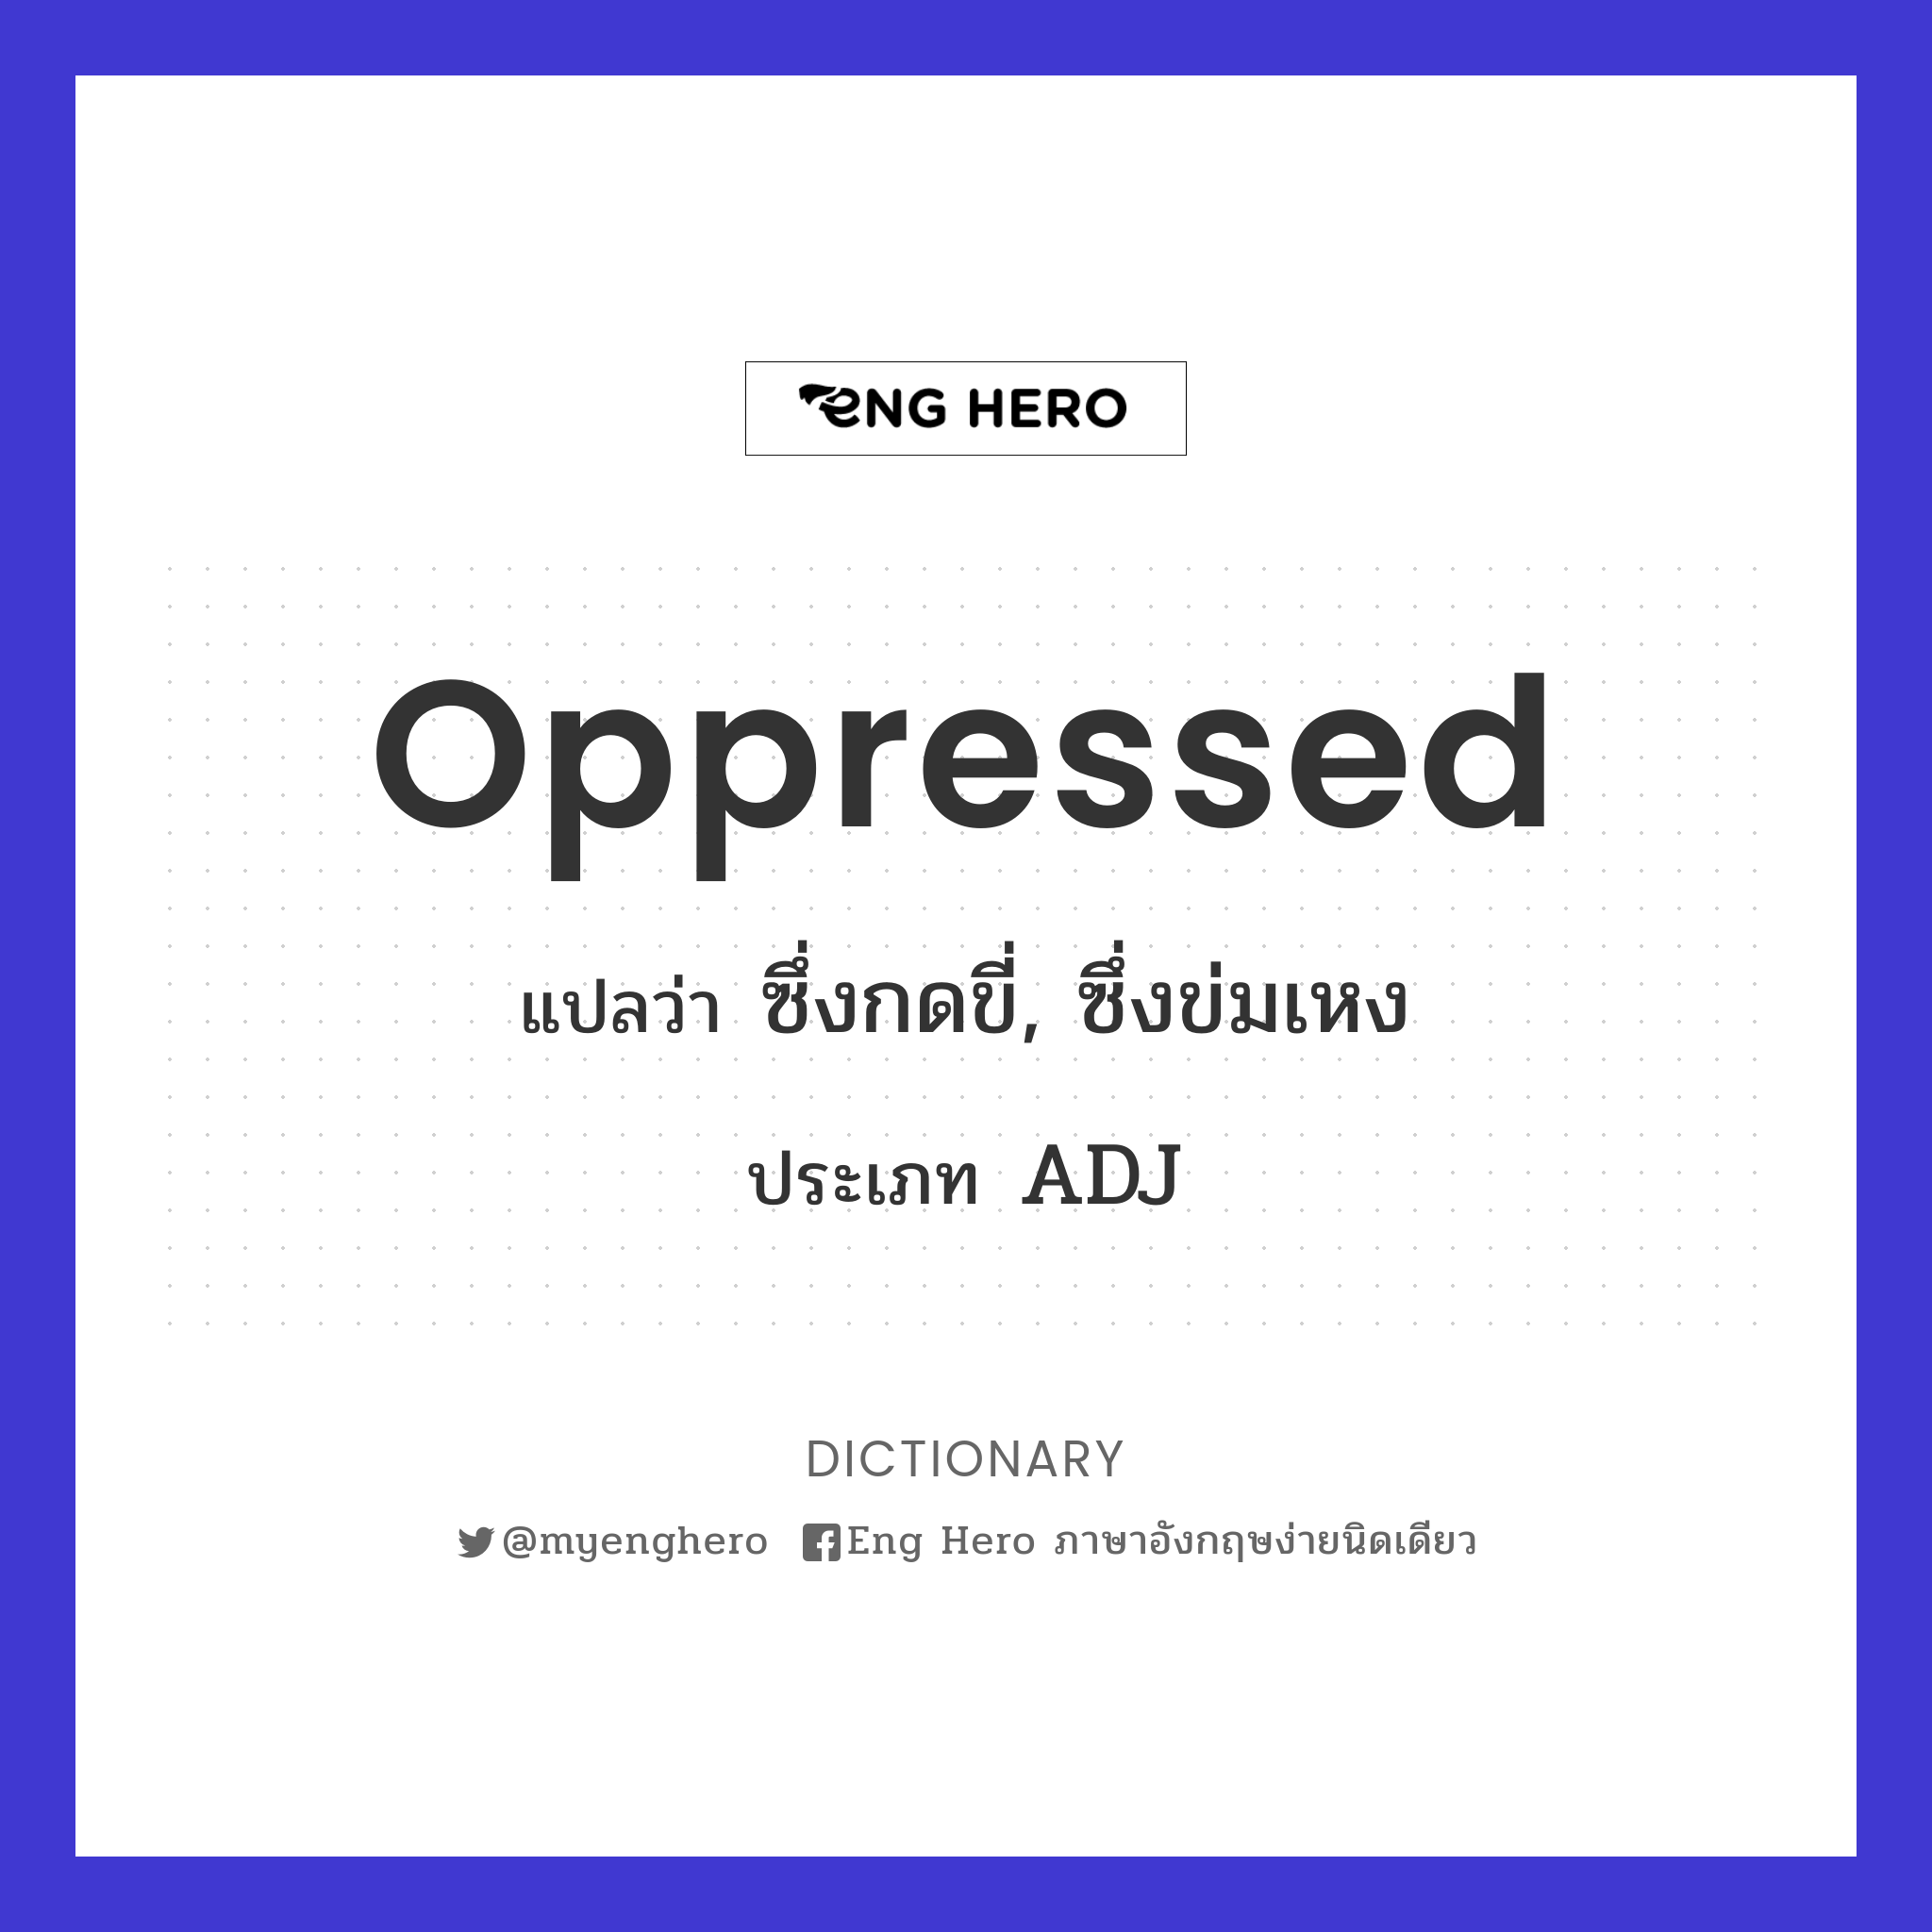 oppressed